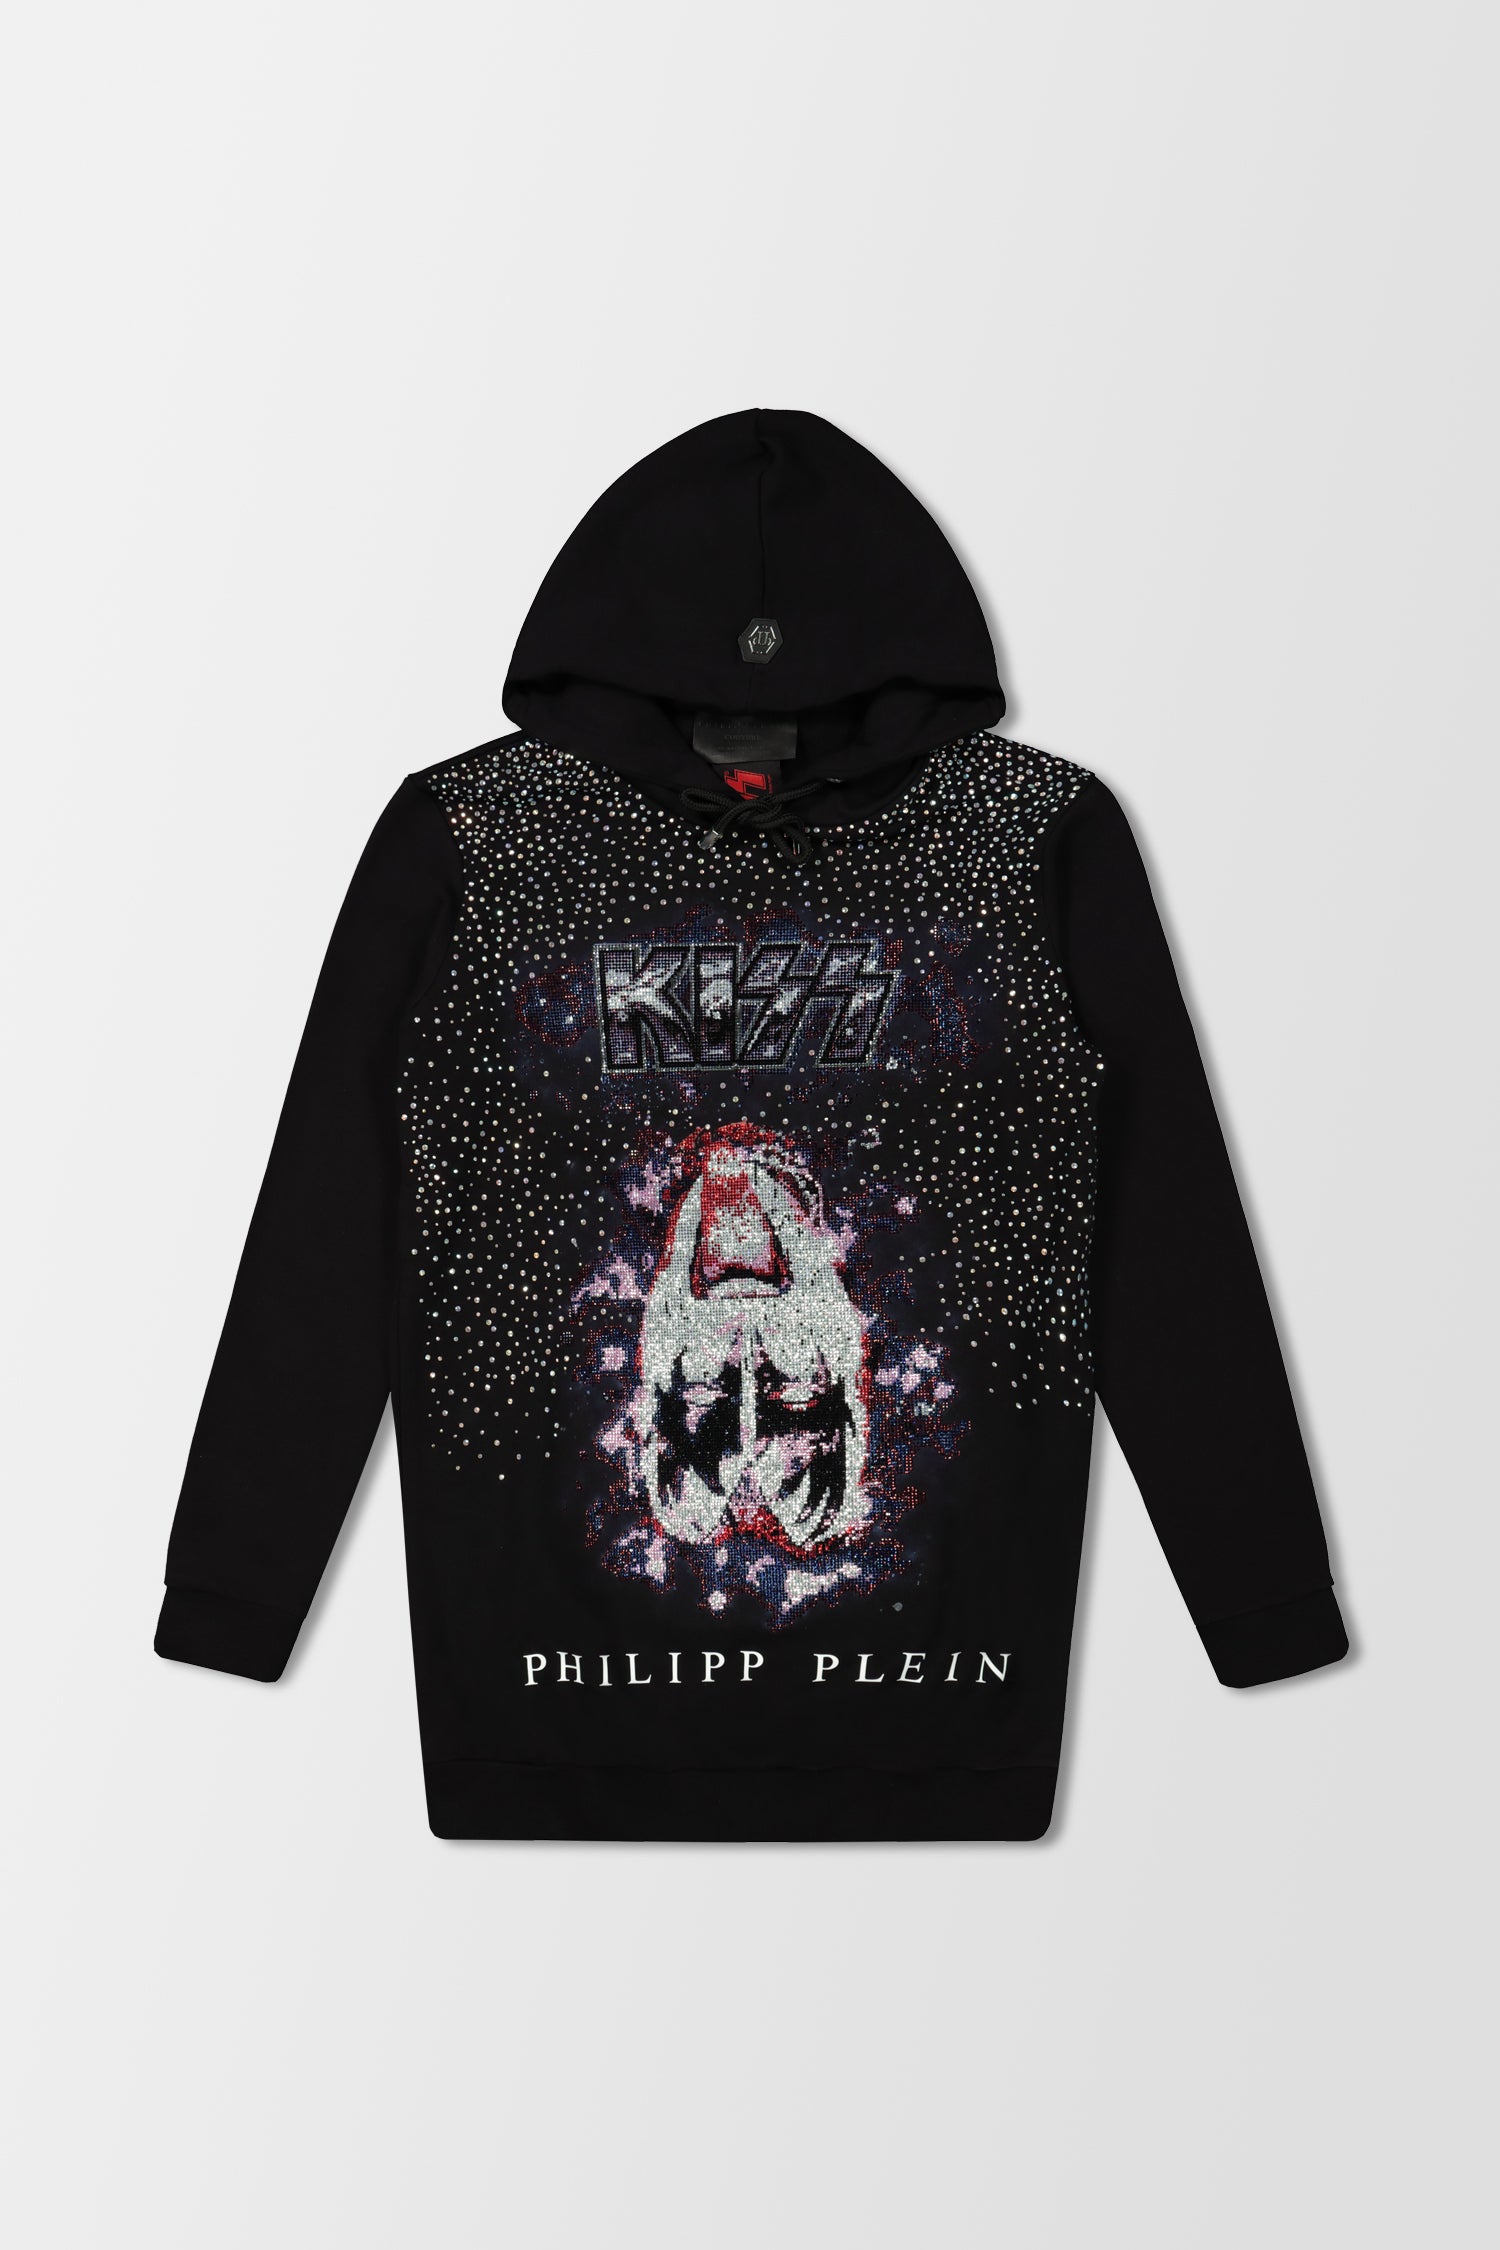 Philipp Plein Dress Rock B Black Hoodie Sweatshirt